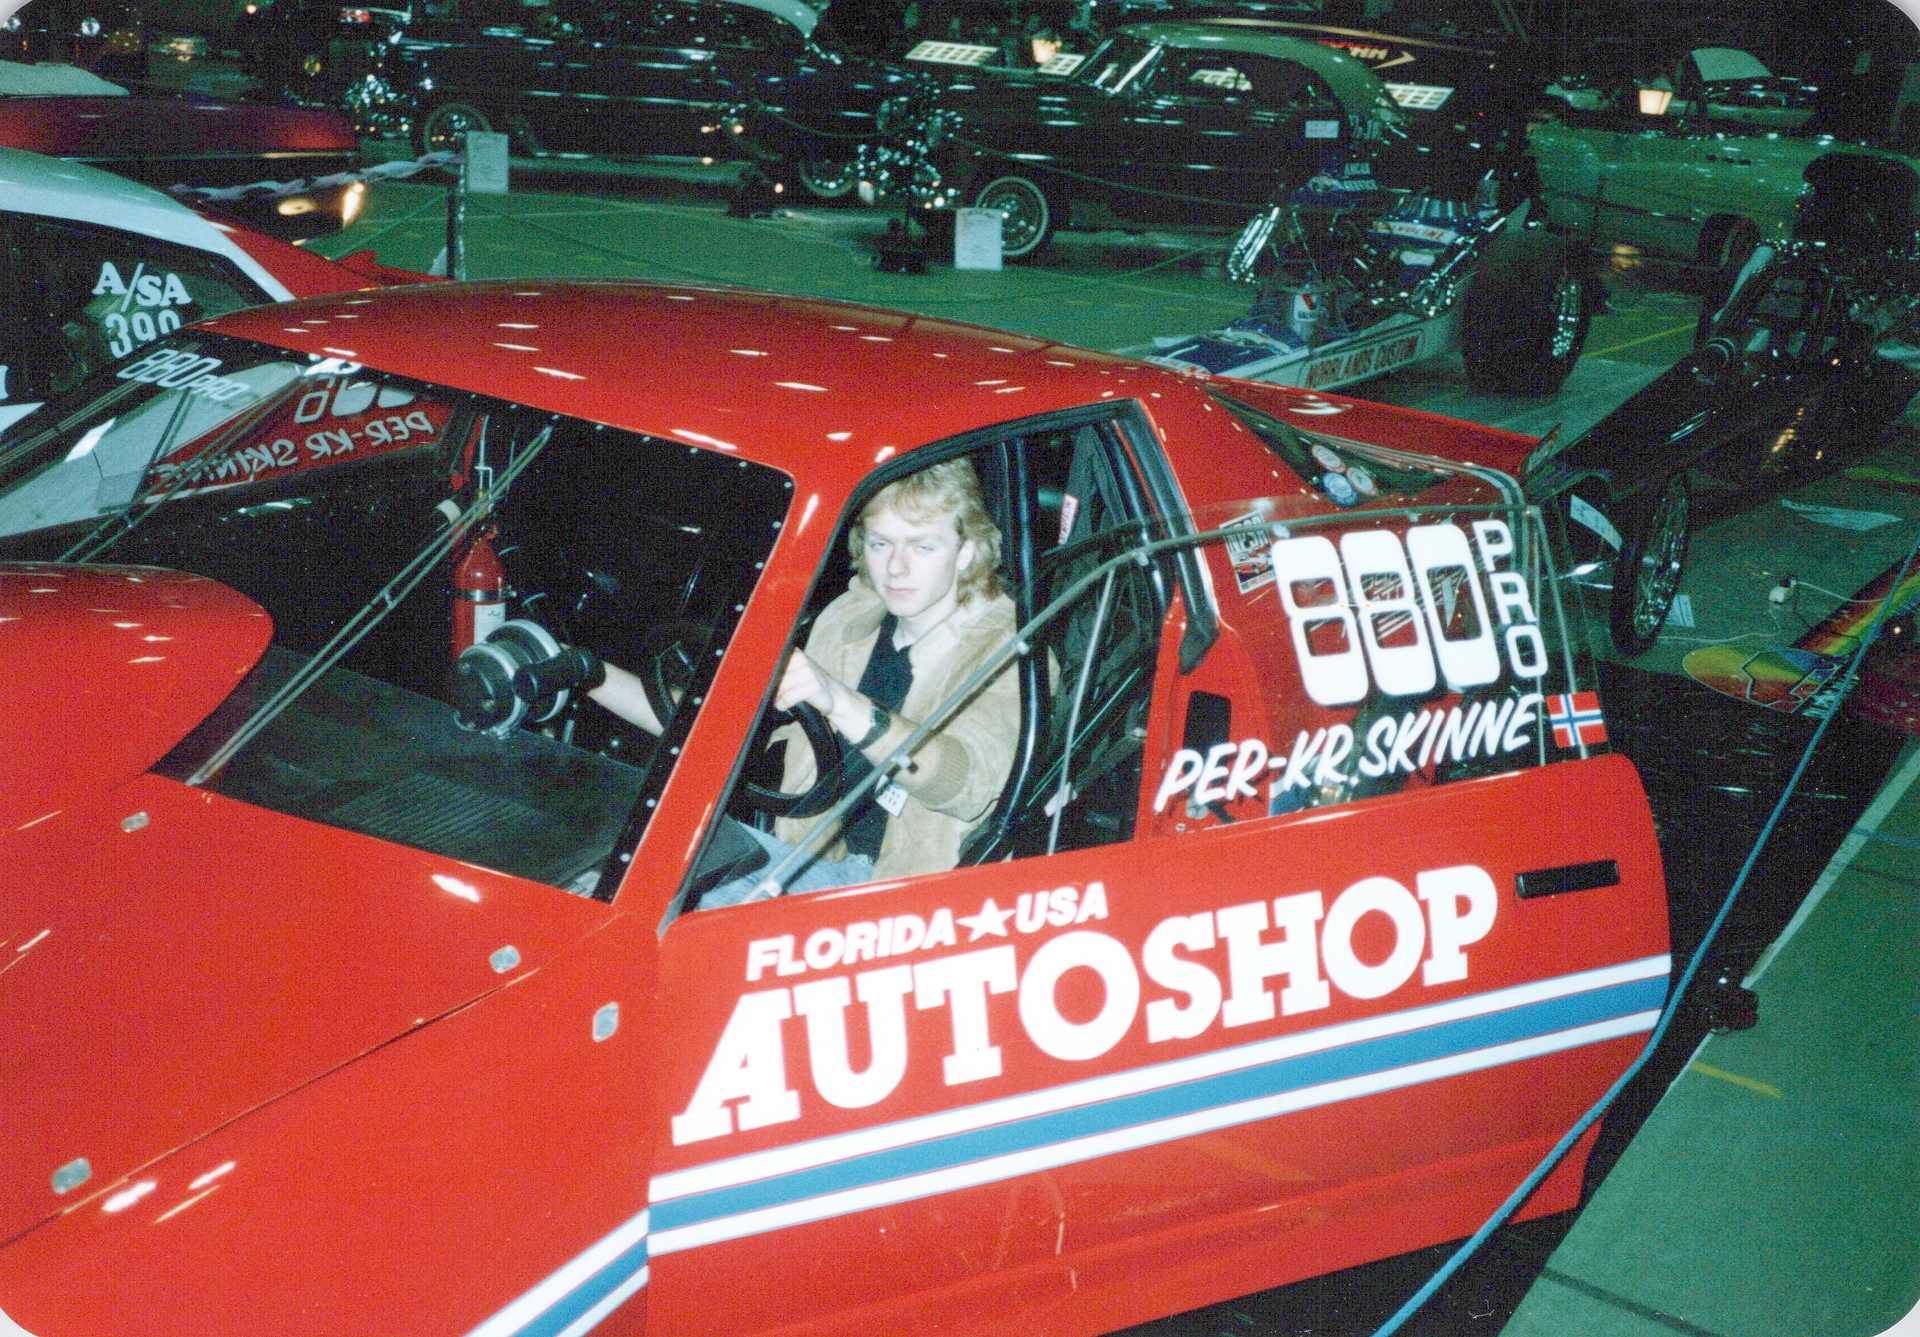 1989_Motorshow Askimhallen_0005.jpg